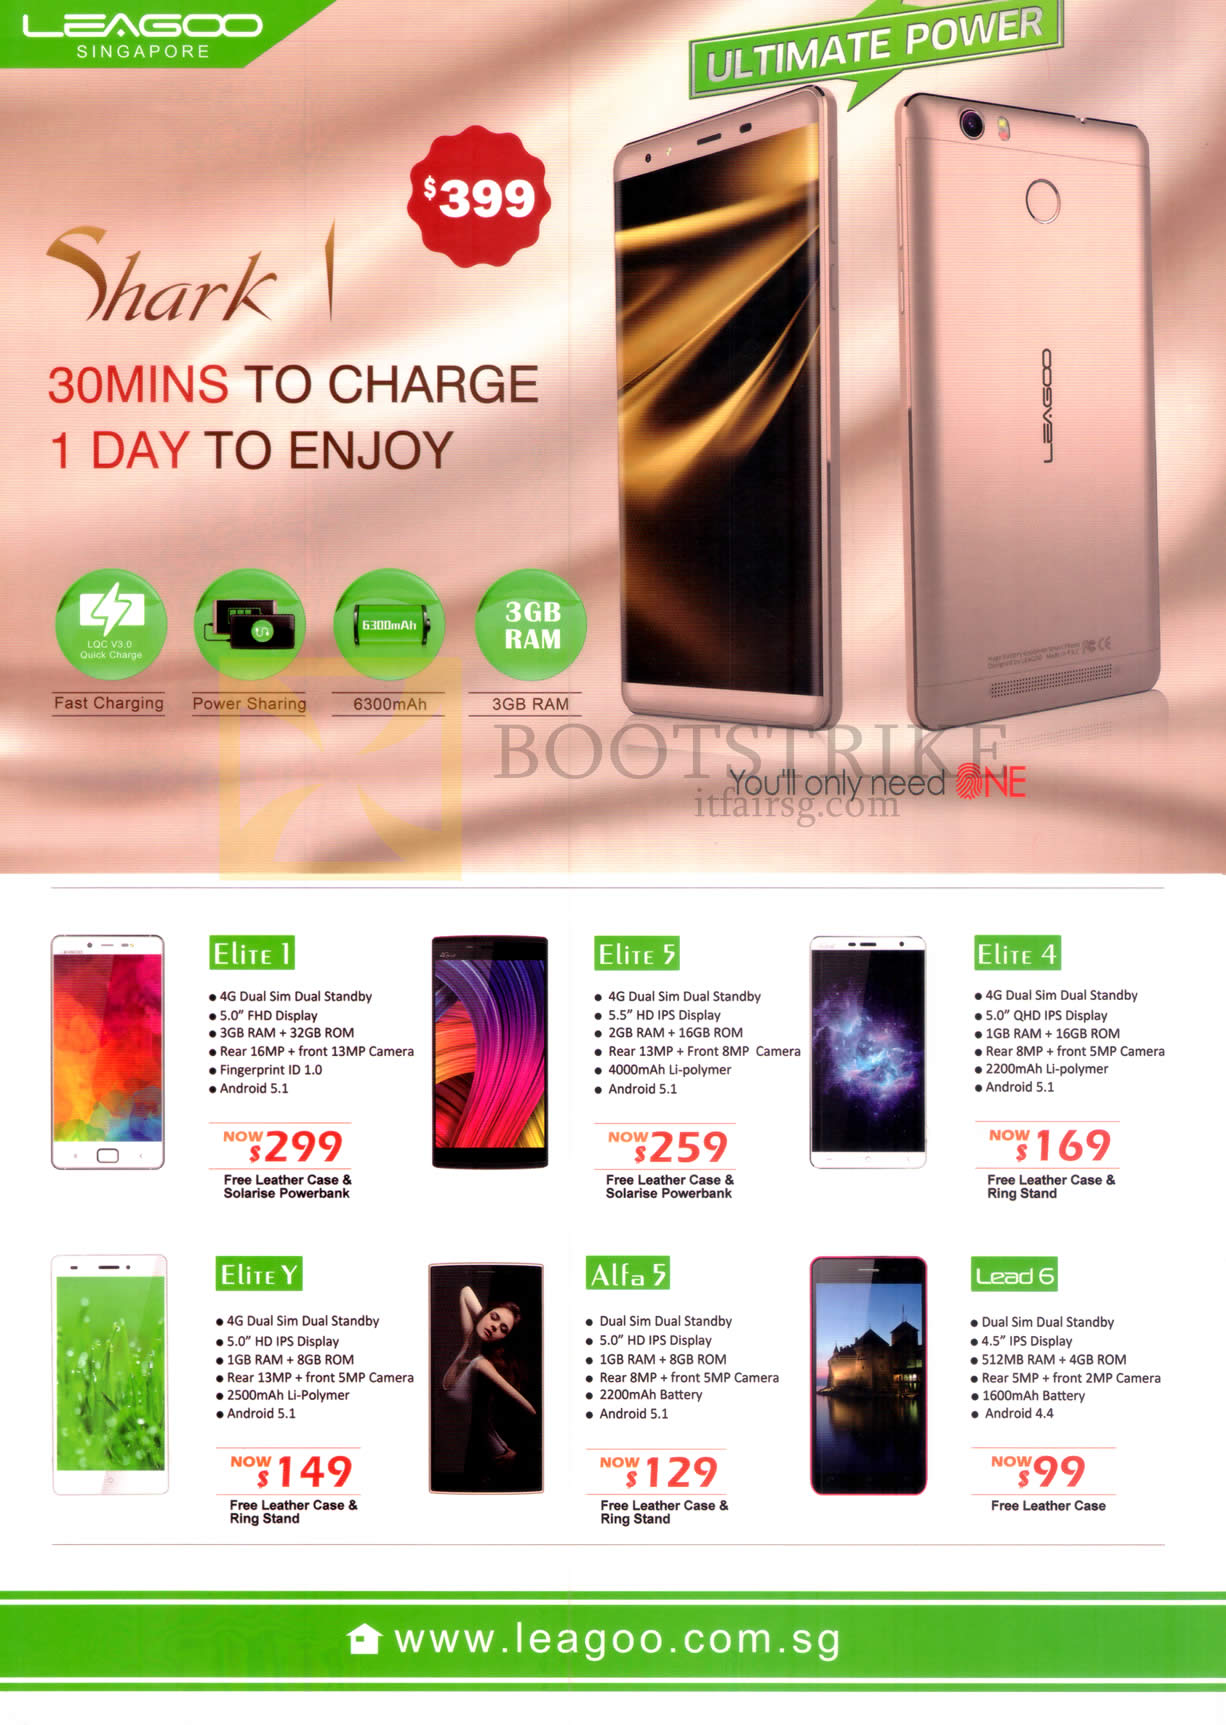 PC SHOW 2016 price list image brochure of Leagoo Mobile Phones Shark 1, Elite 1, 5, 4, Y, Alfa 5, Lead 6